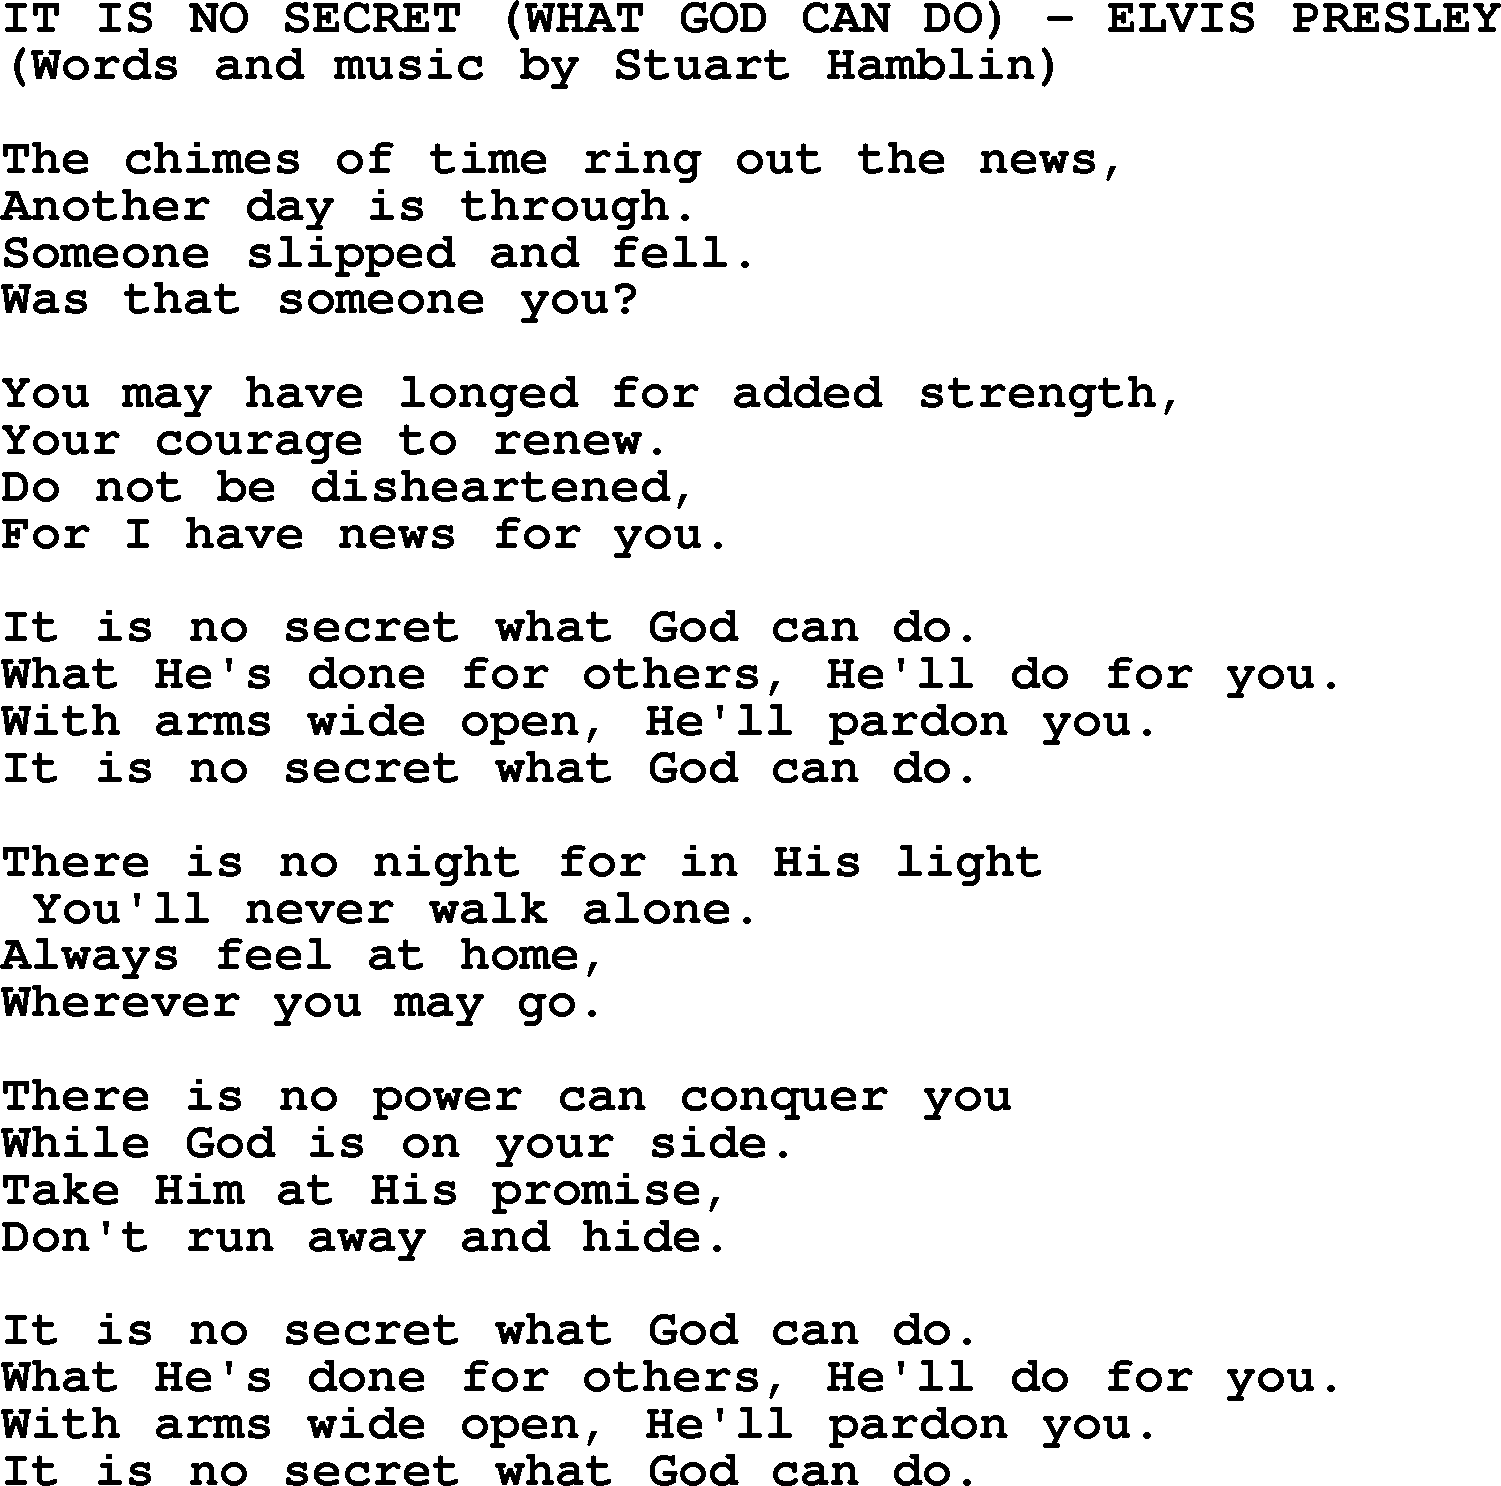 Elvis Presley song: It Is No Secret (What God Can Do) lyrics